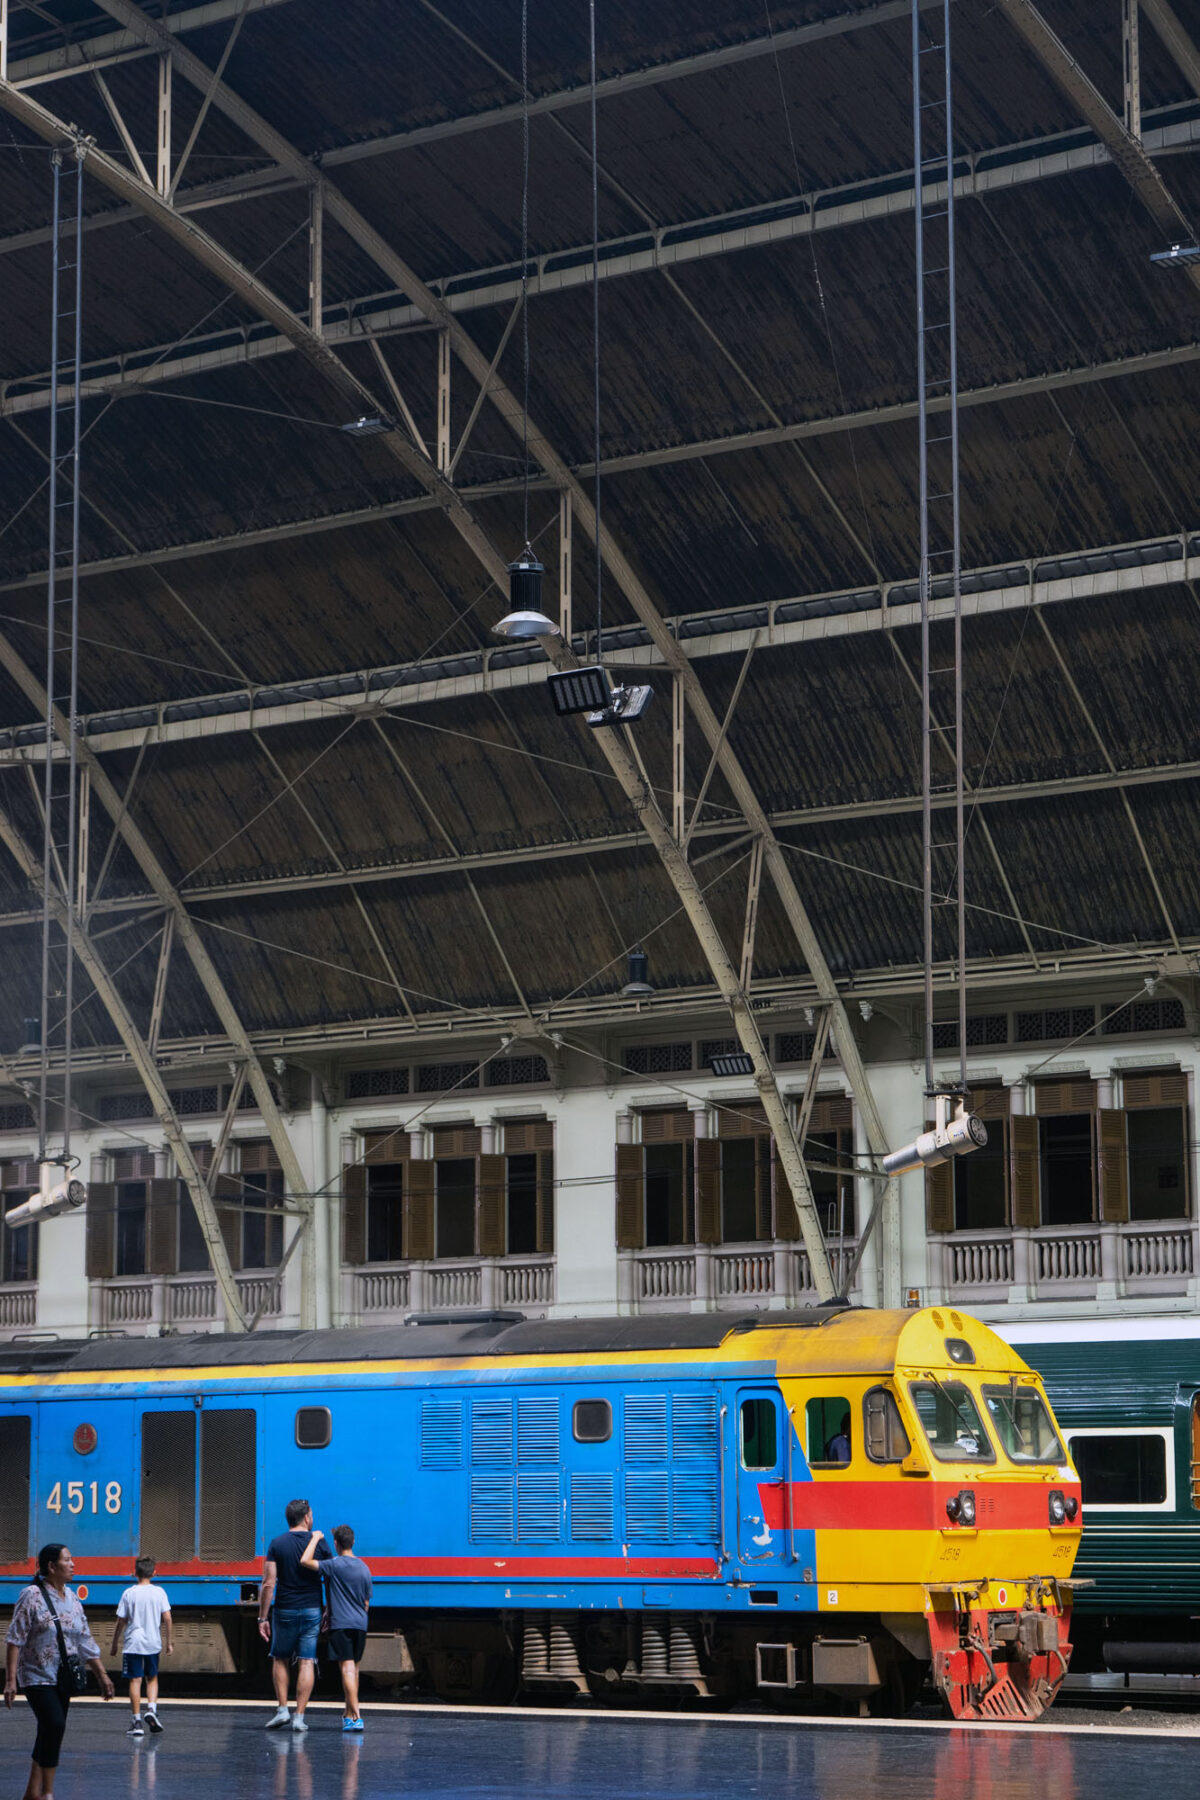 18 Old Bangkok Train Station DSC07689